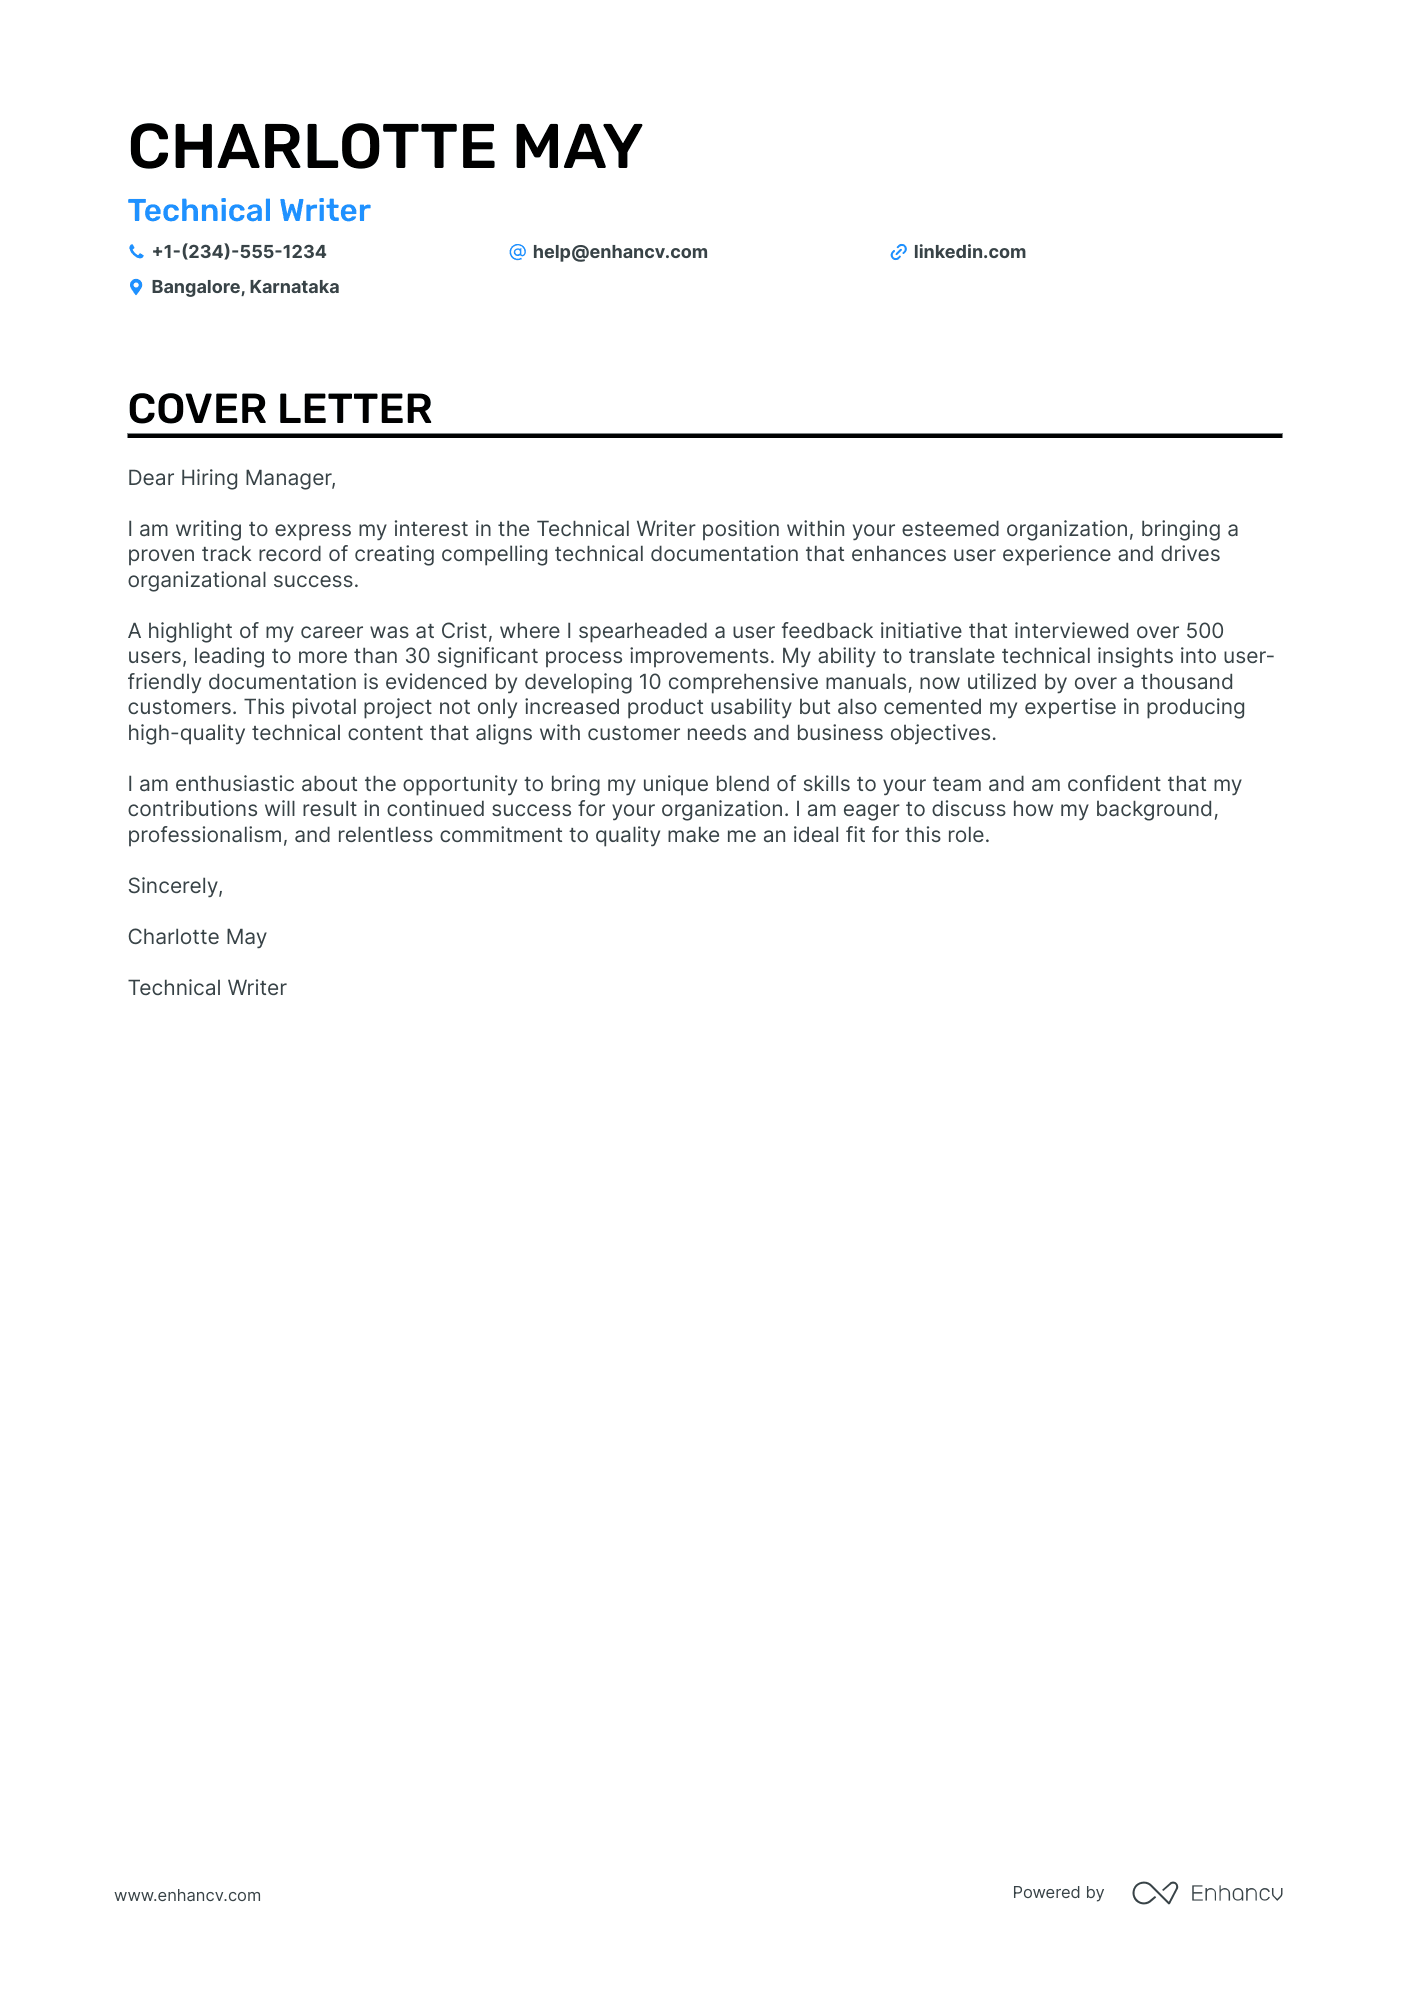 Technical Writer cover letter